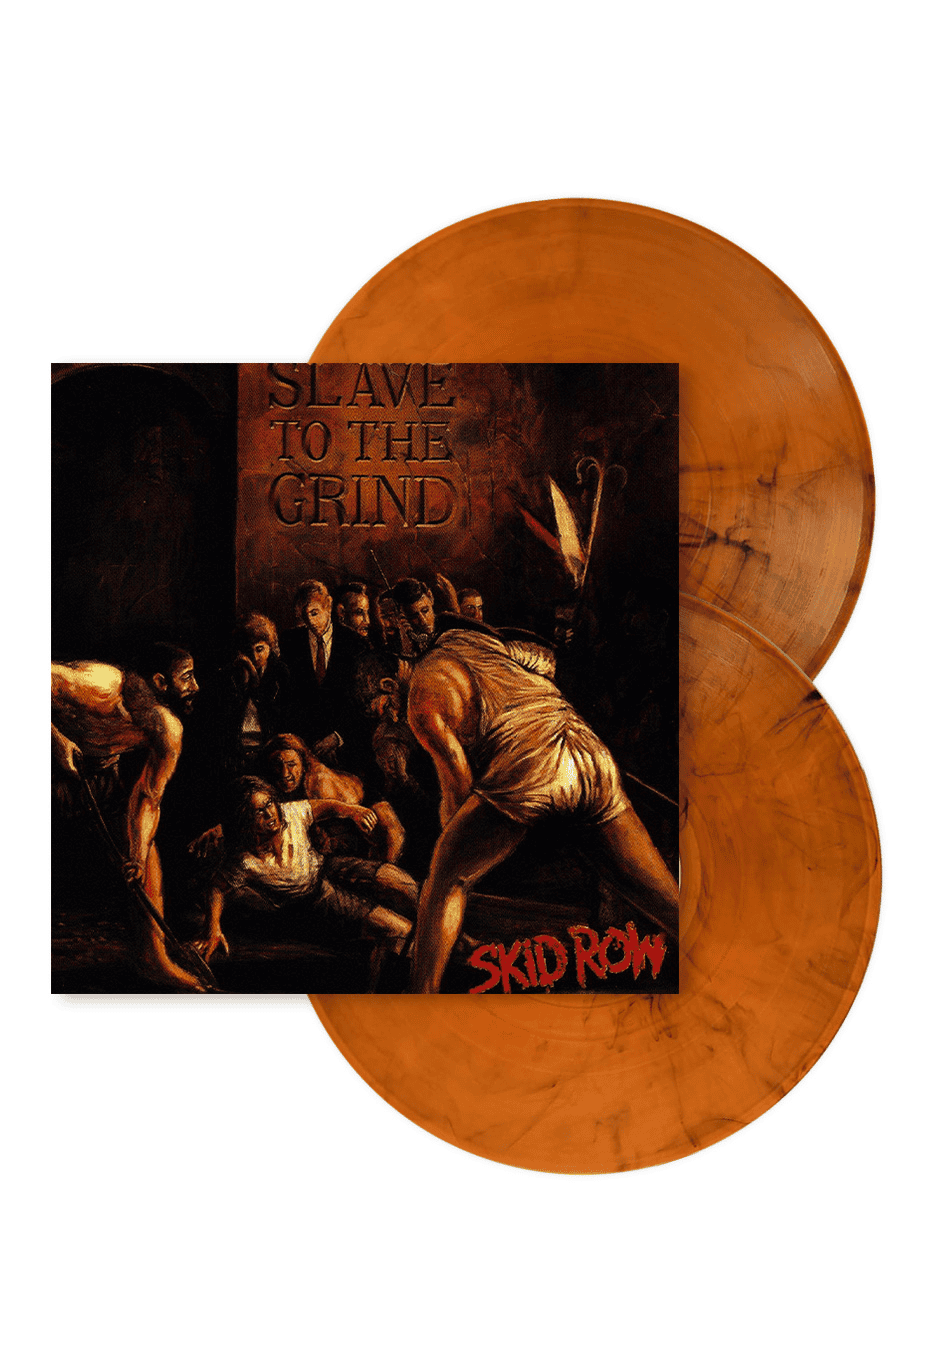 SKID ROW - Slave To The Grind Vinyl - JWrayRecords